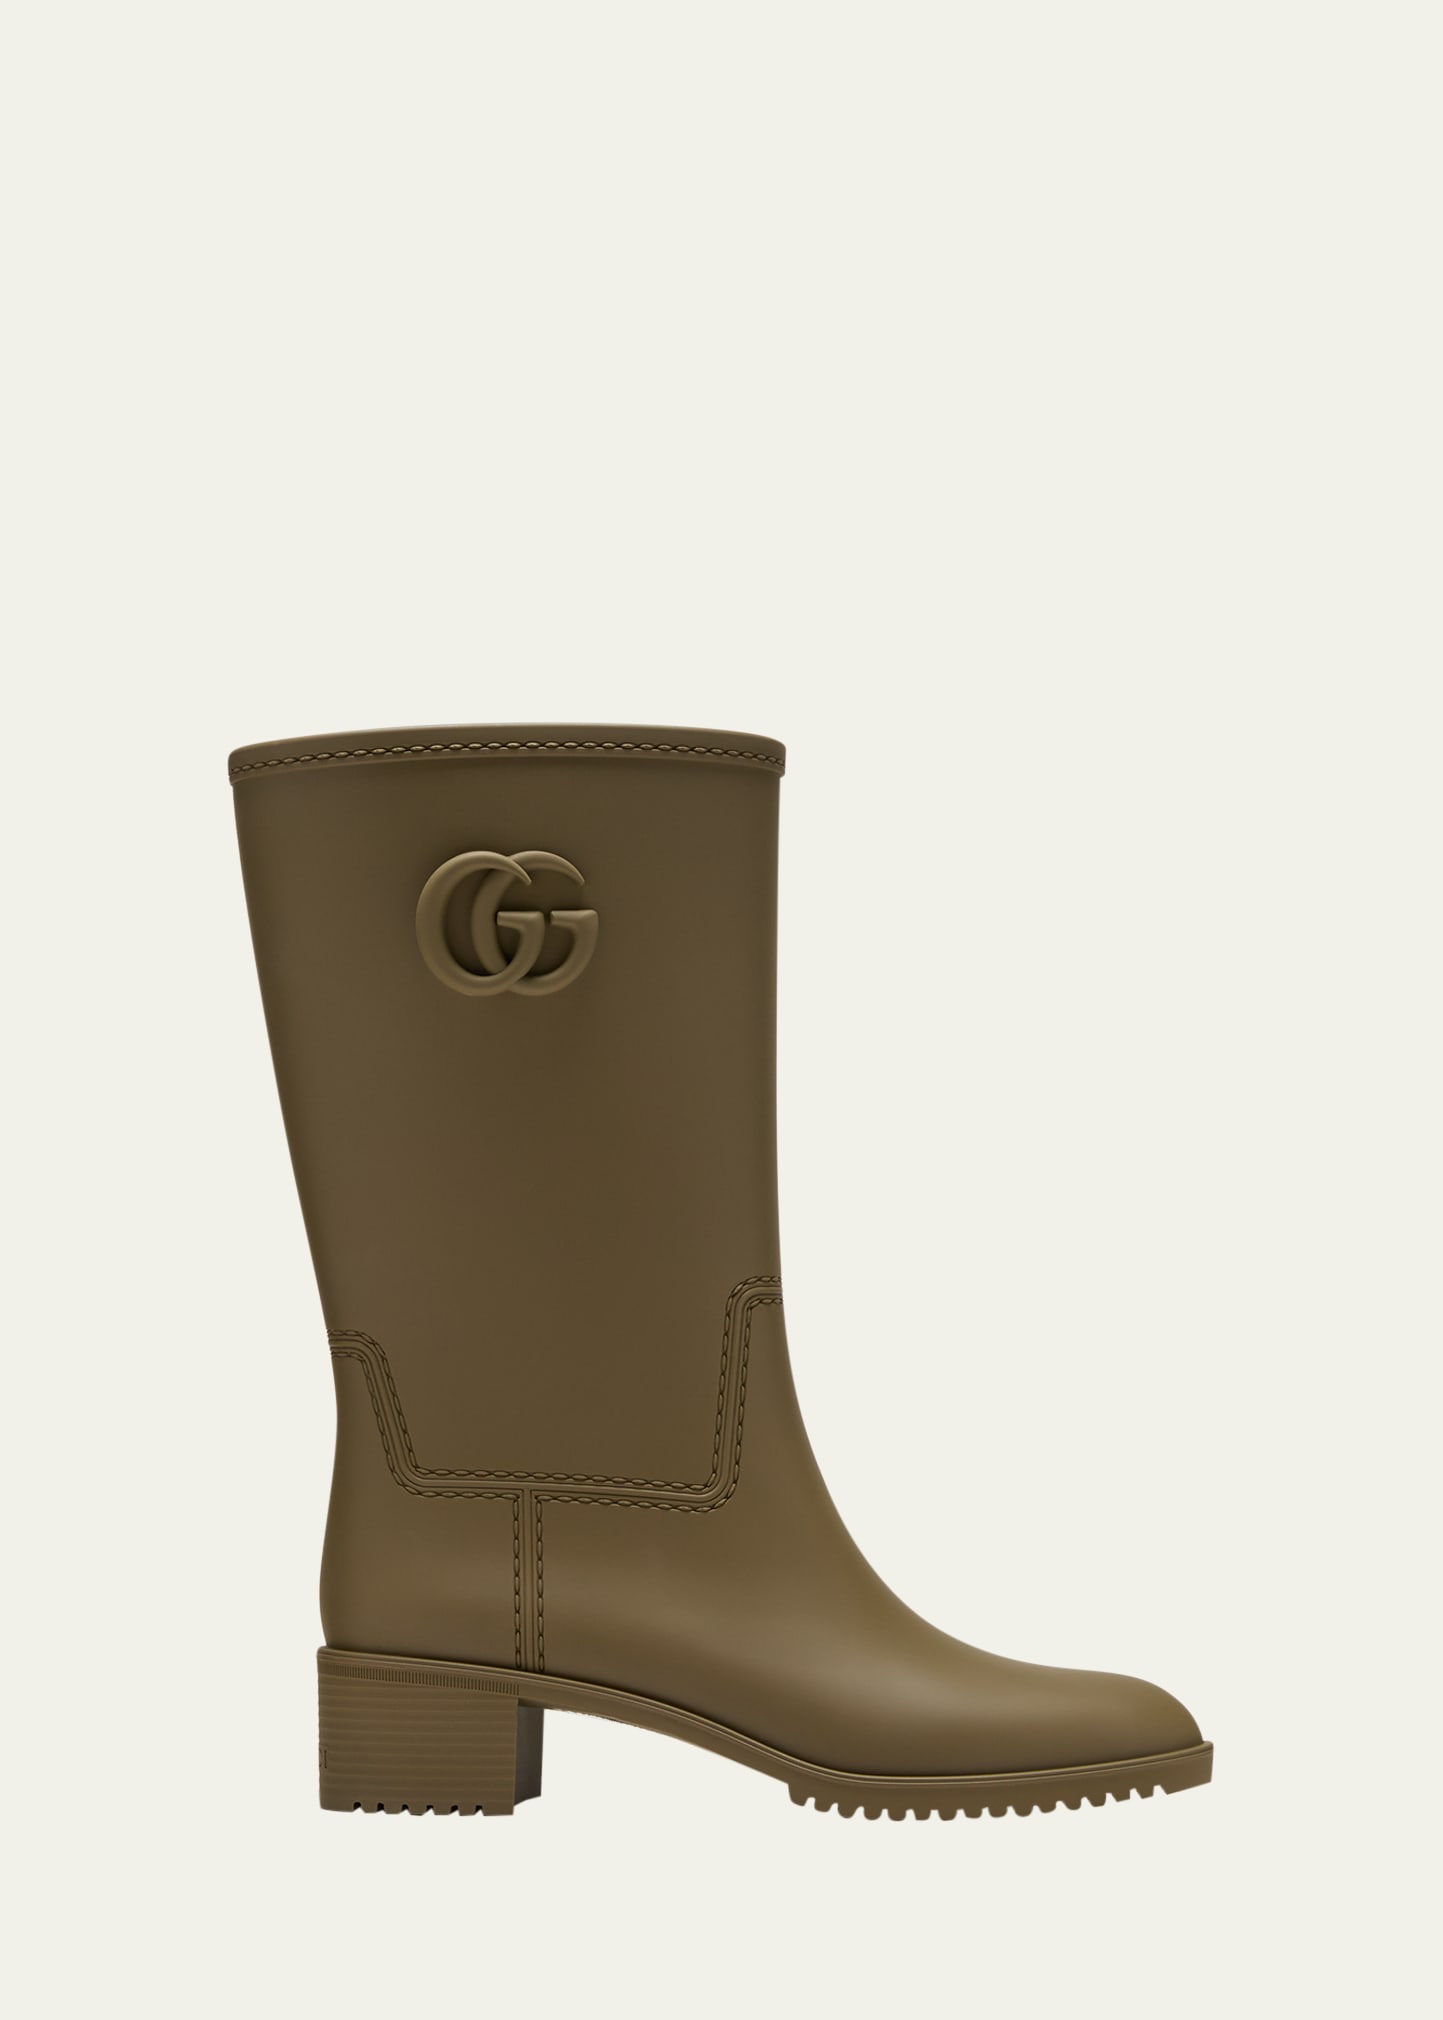 GG Rubber Rain Boots